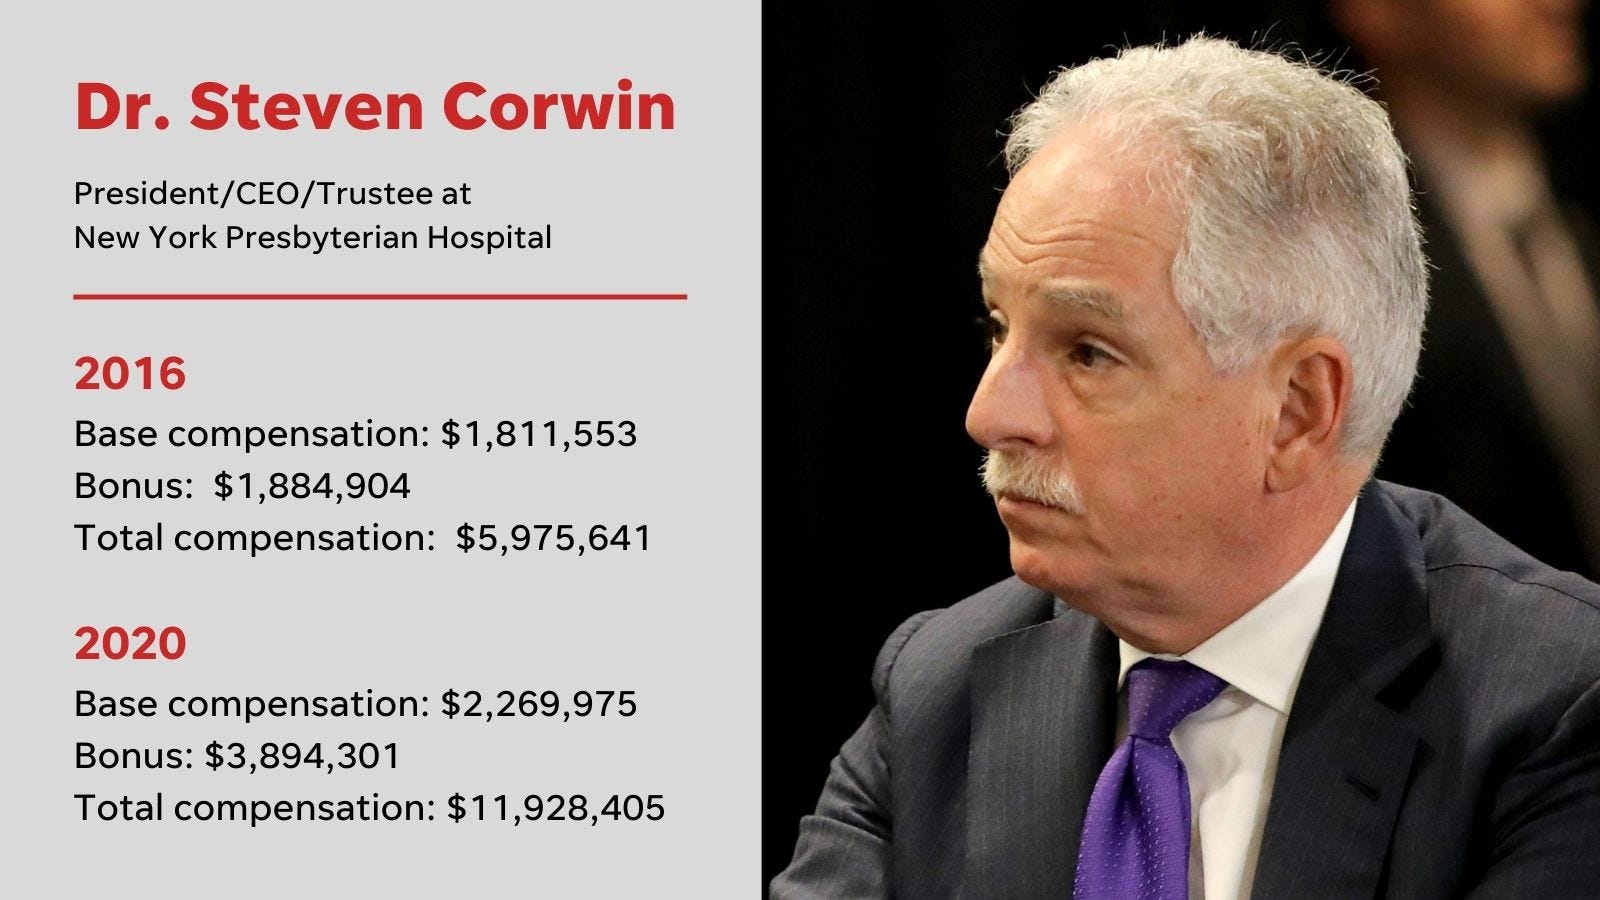 Dr. Steven Corwin salary info.